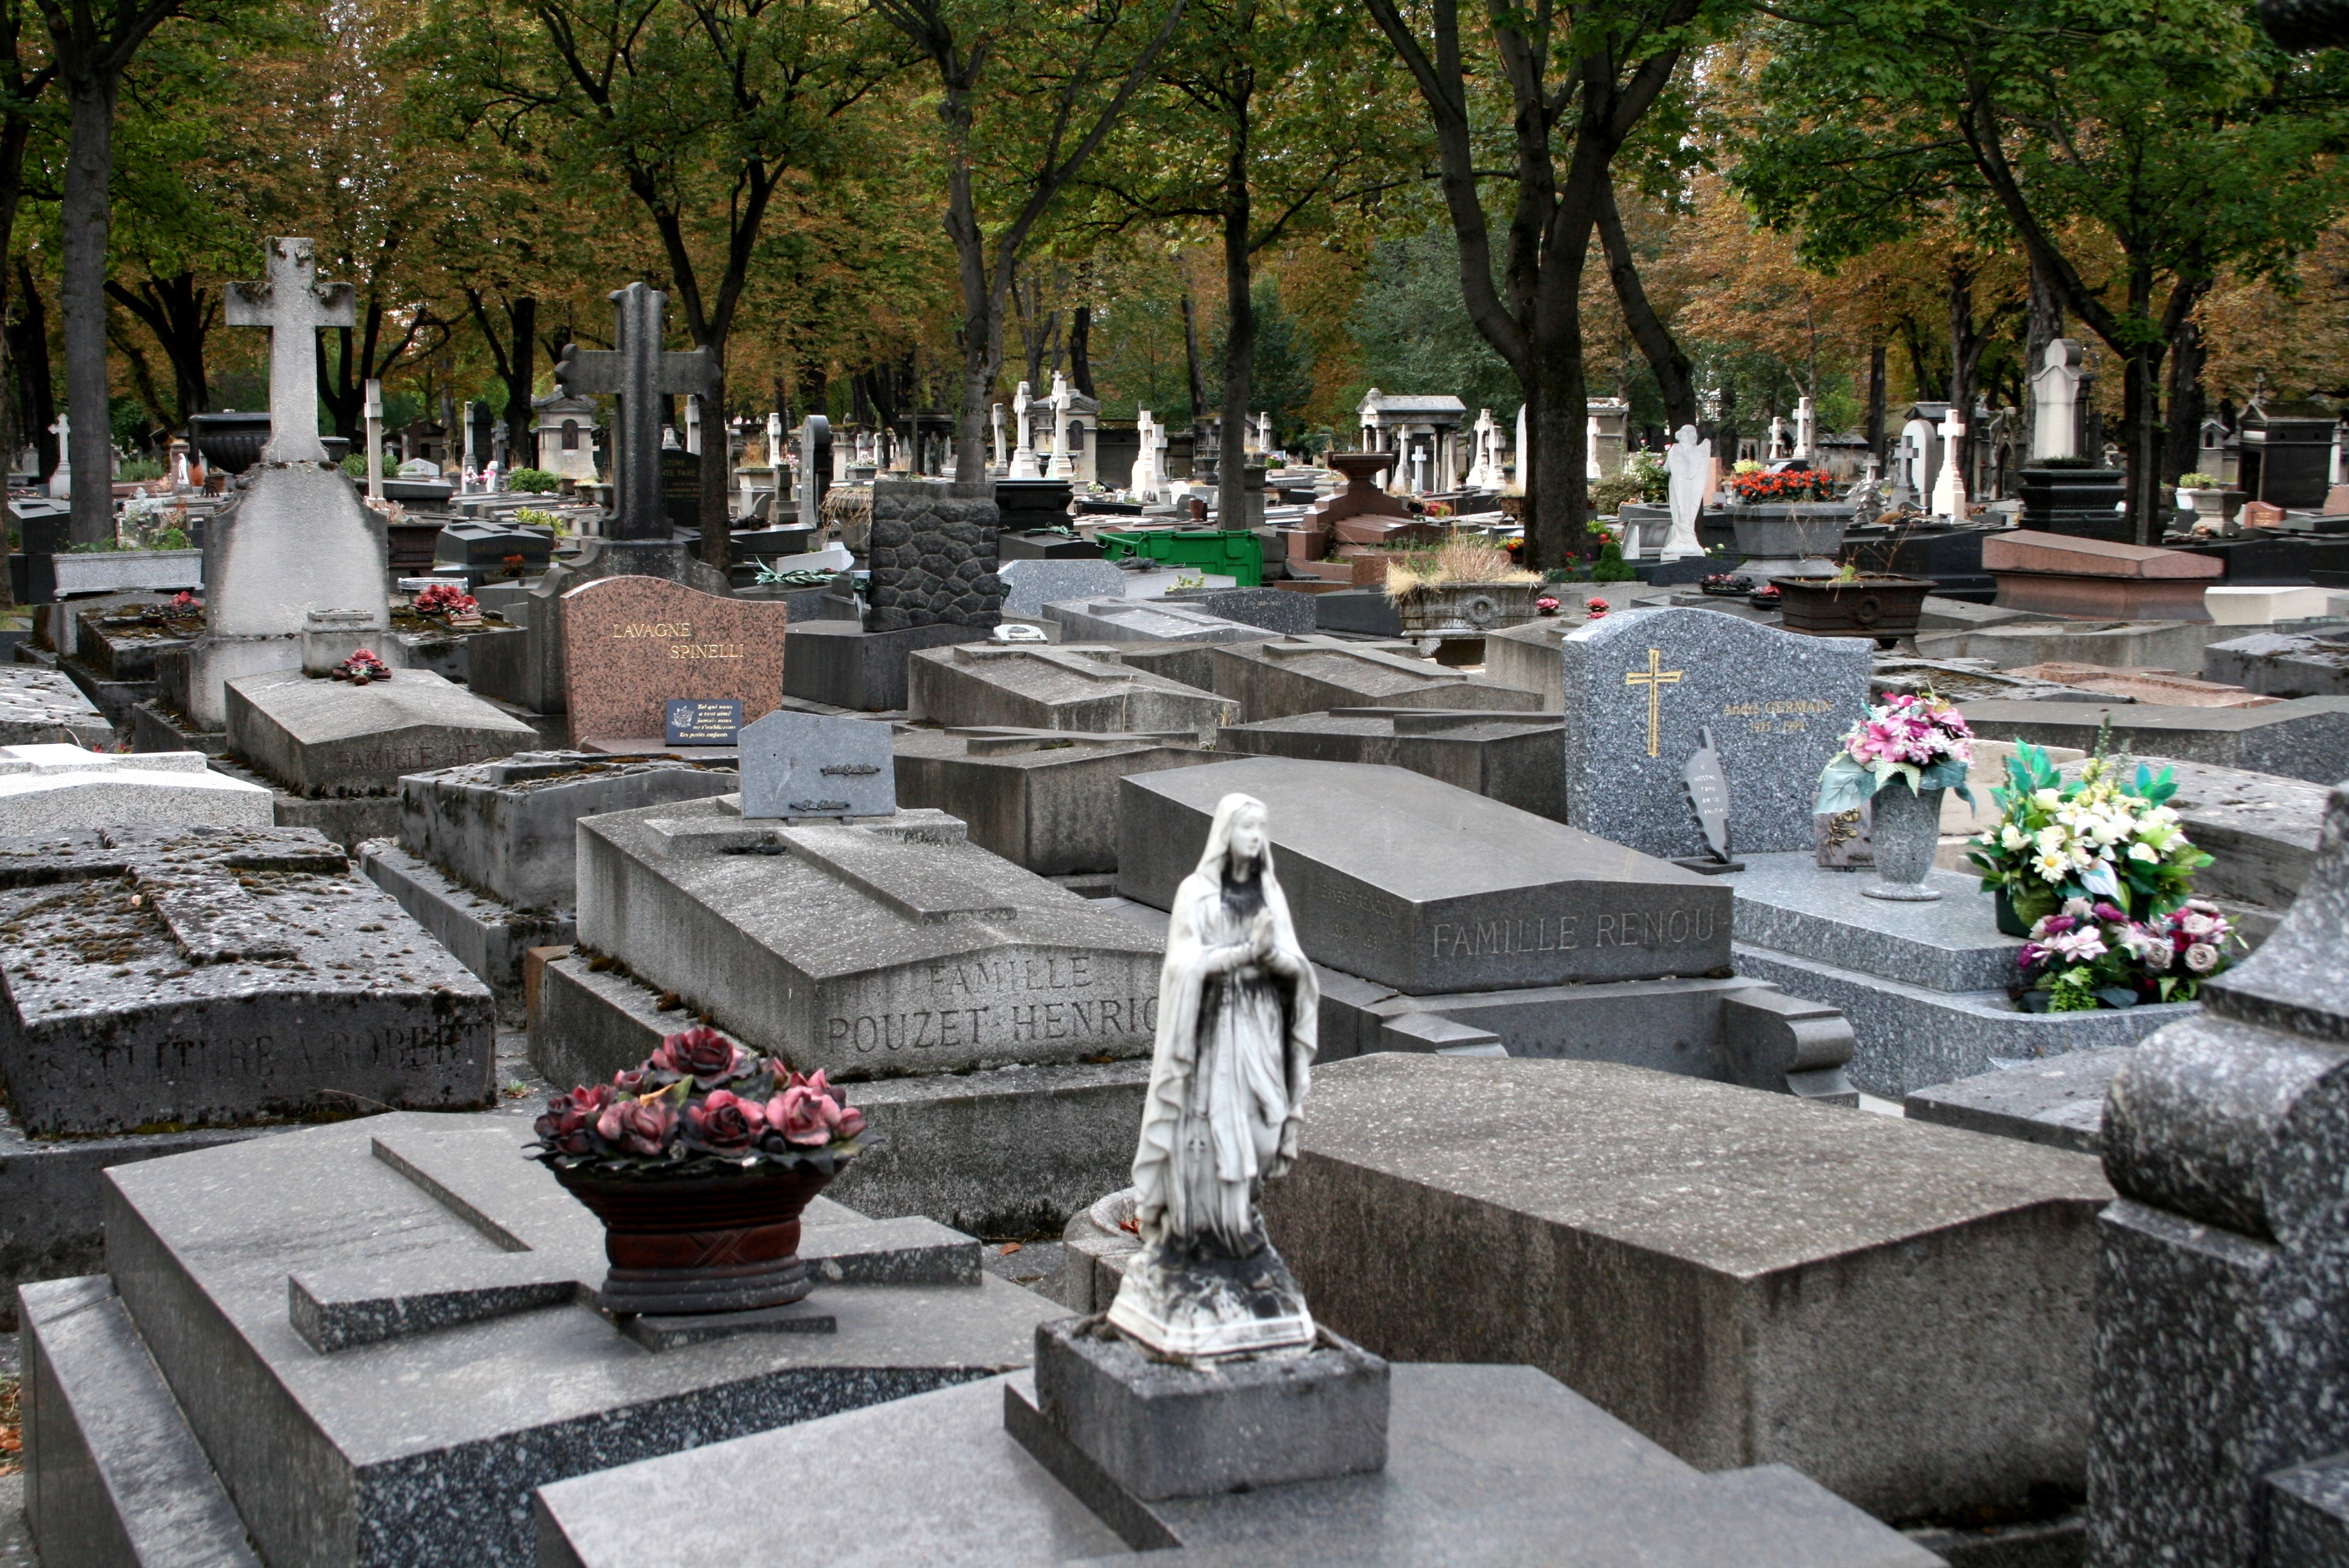 Кладбище Батиньоль в Париже. Могила Шаляпина кладбище Батиньоль в Париже. Могила Федора Шаляпина.